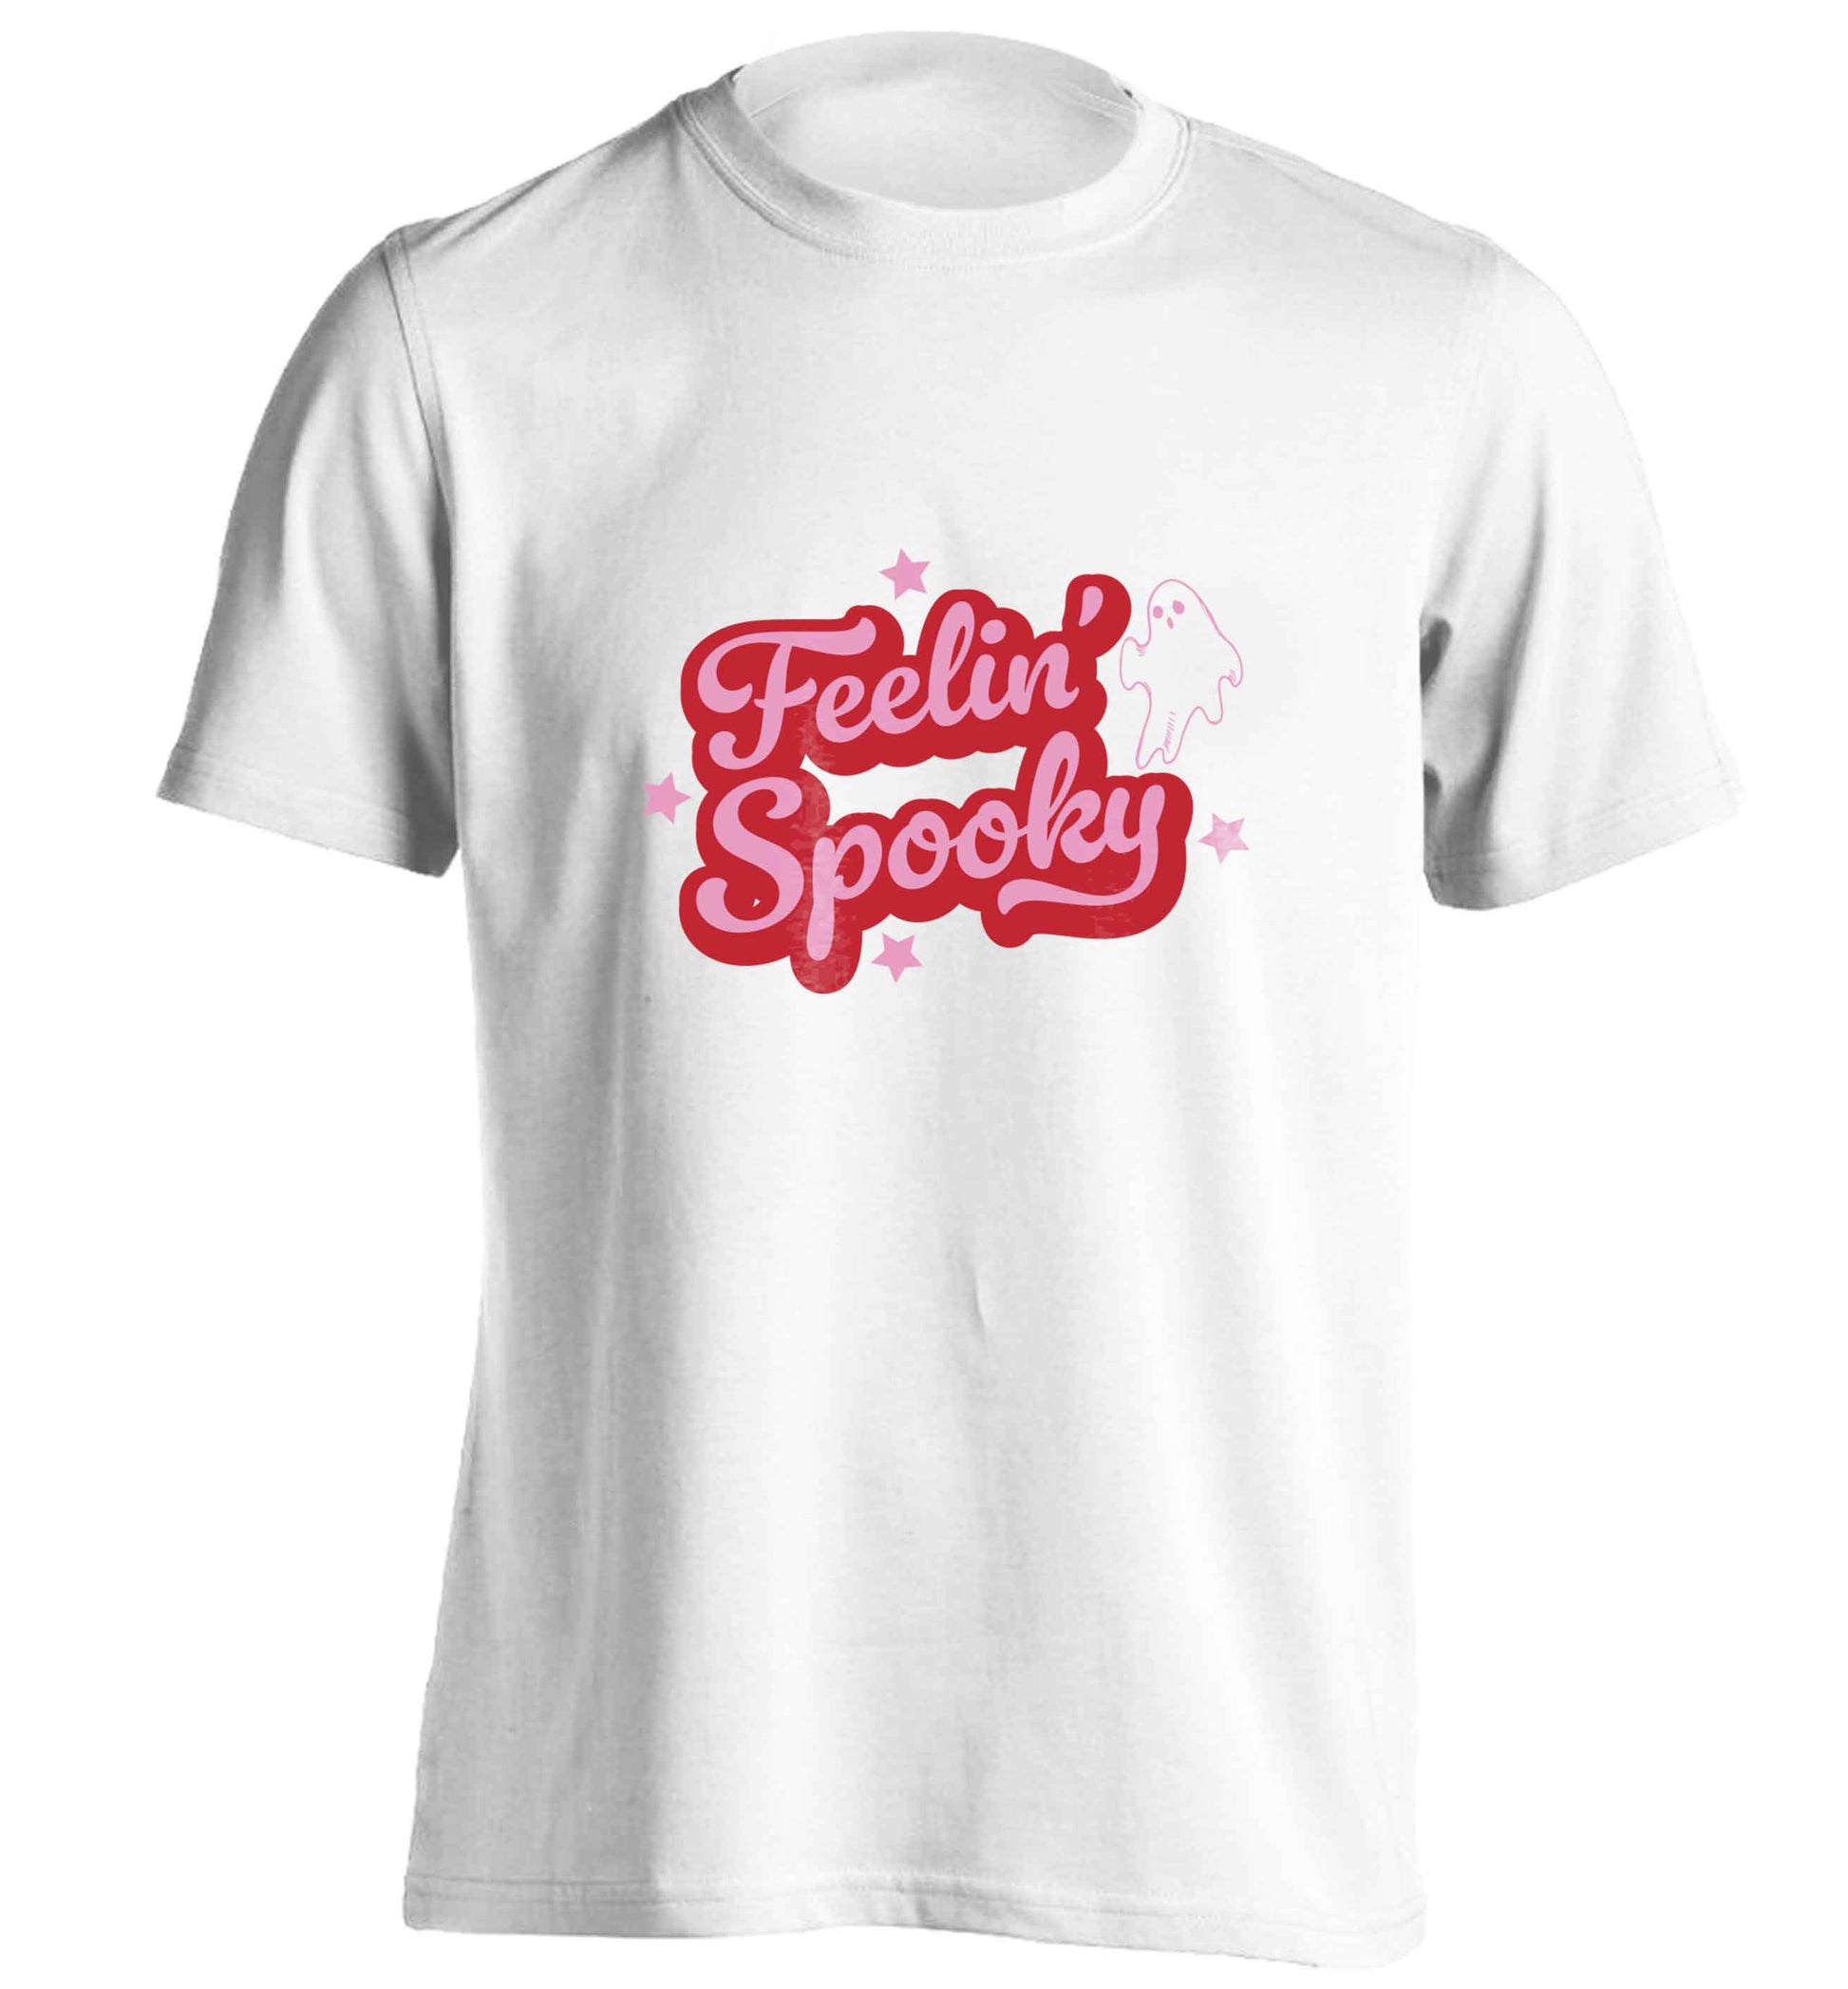 Feelin' Spooky Kit adults unisex white Tshirt 2XL